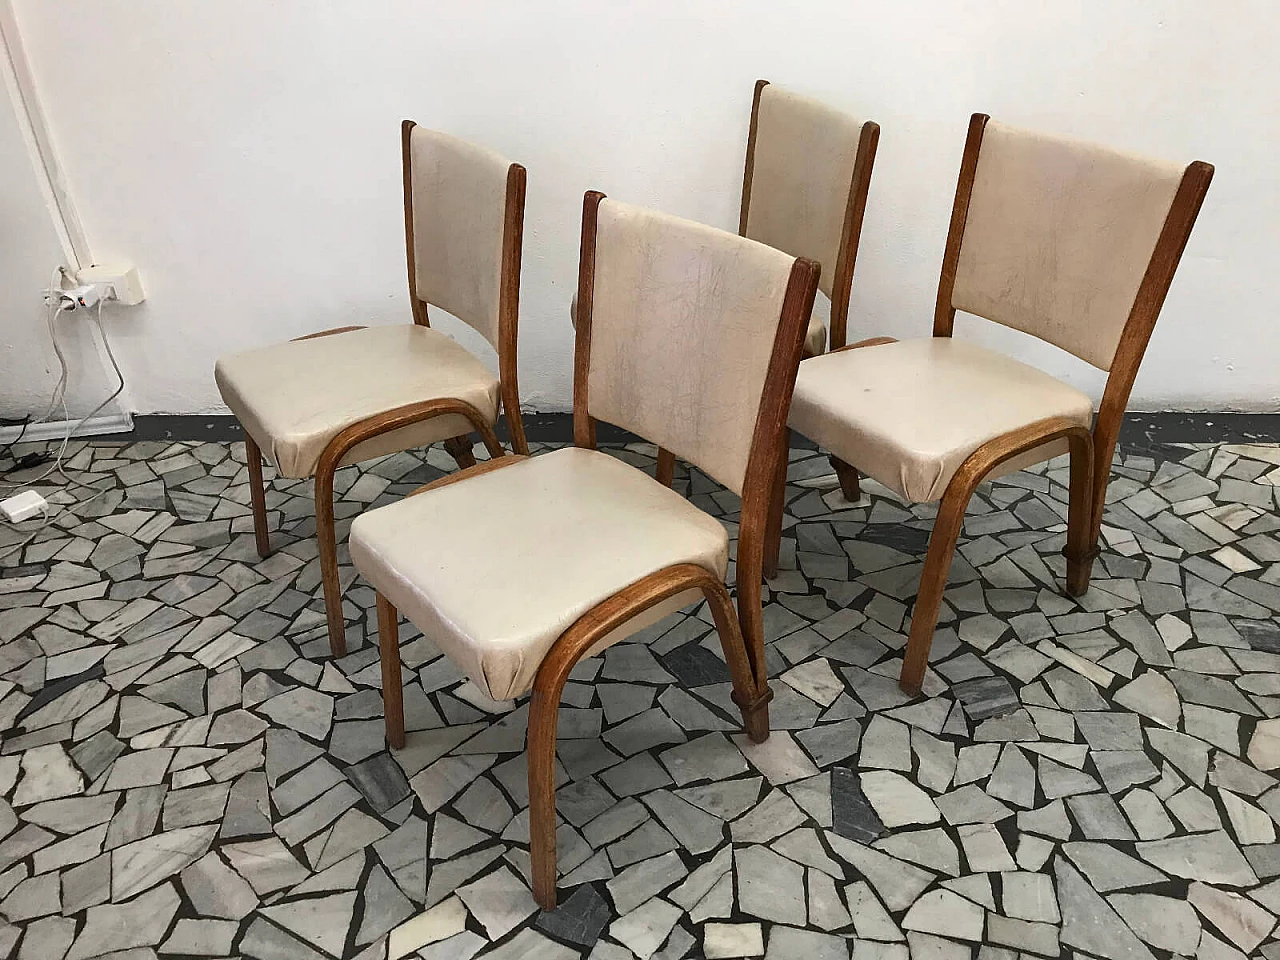 4 cream chairs, Bow-wood. 2